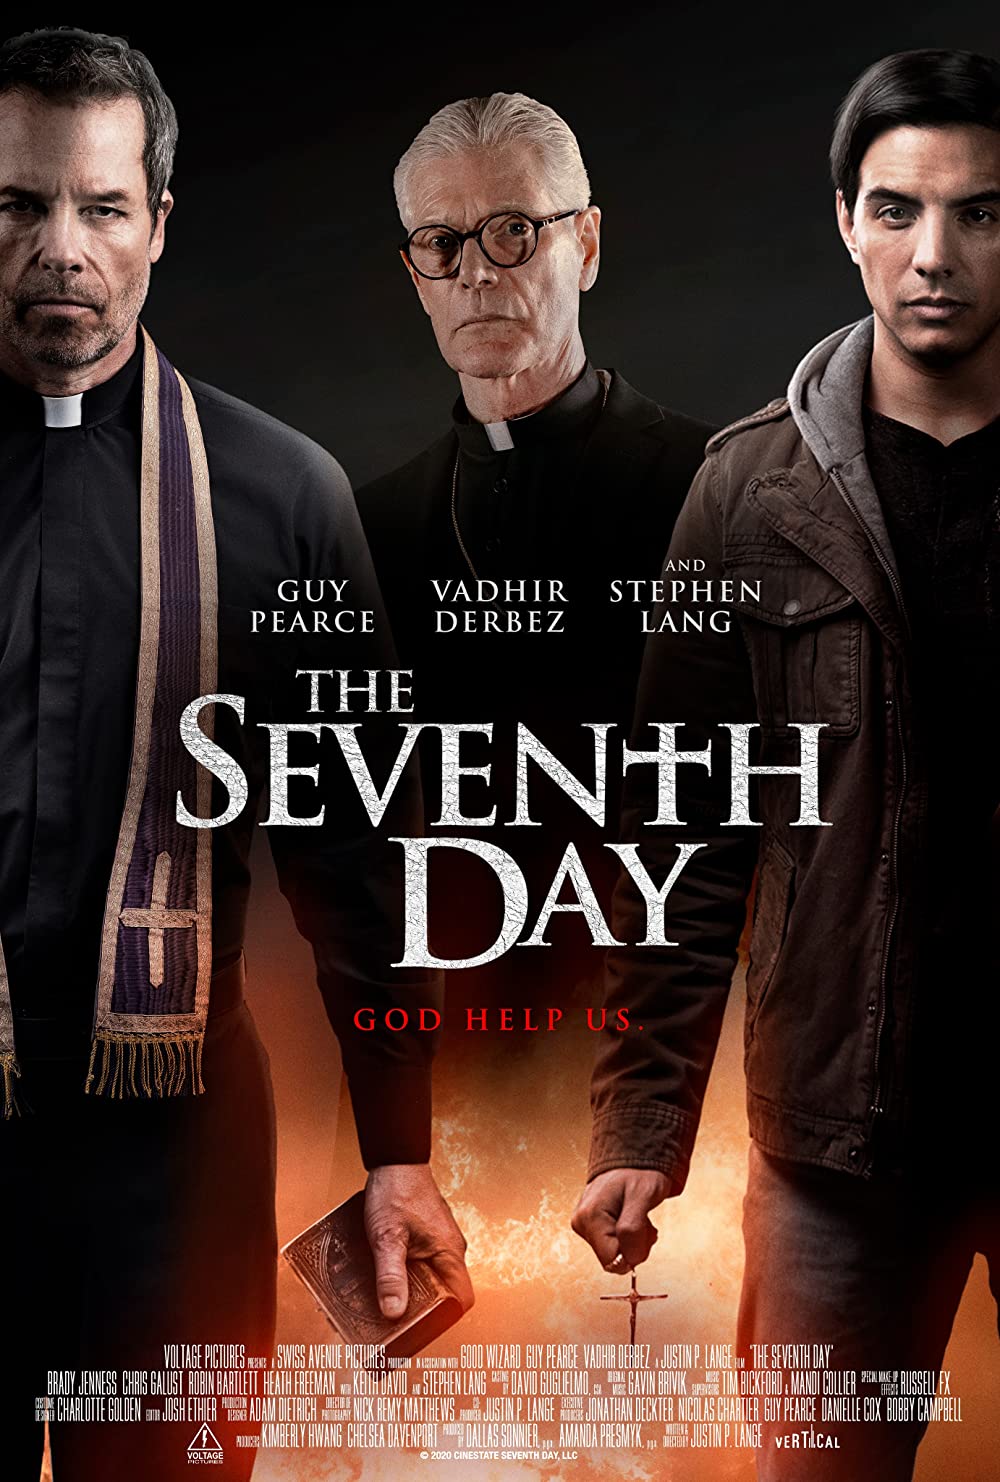 Filmbeschreibung zu The Seventh Day